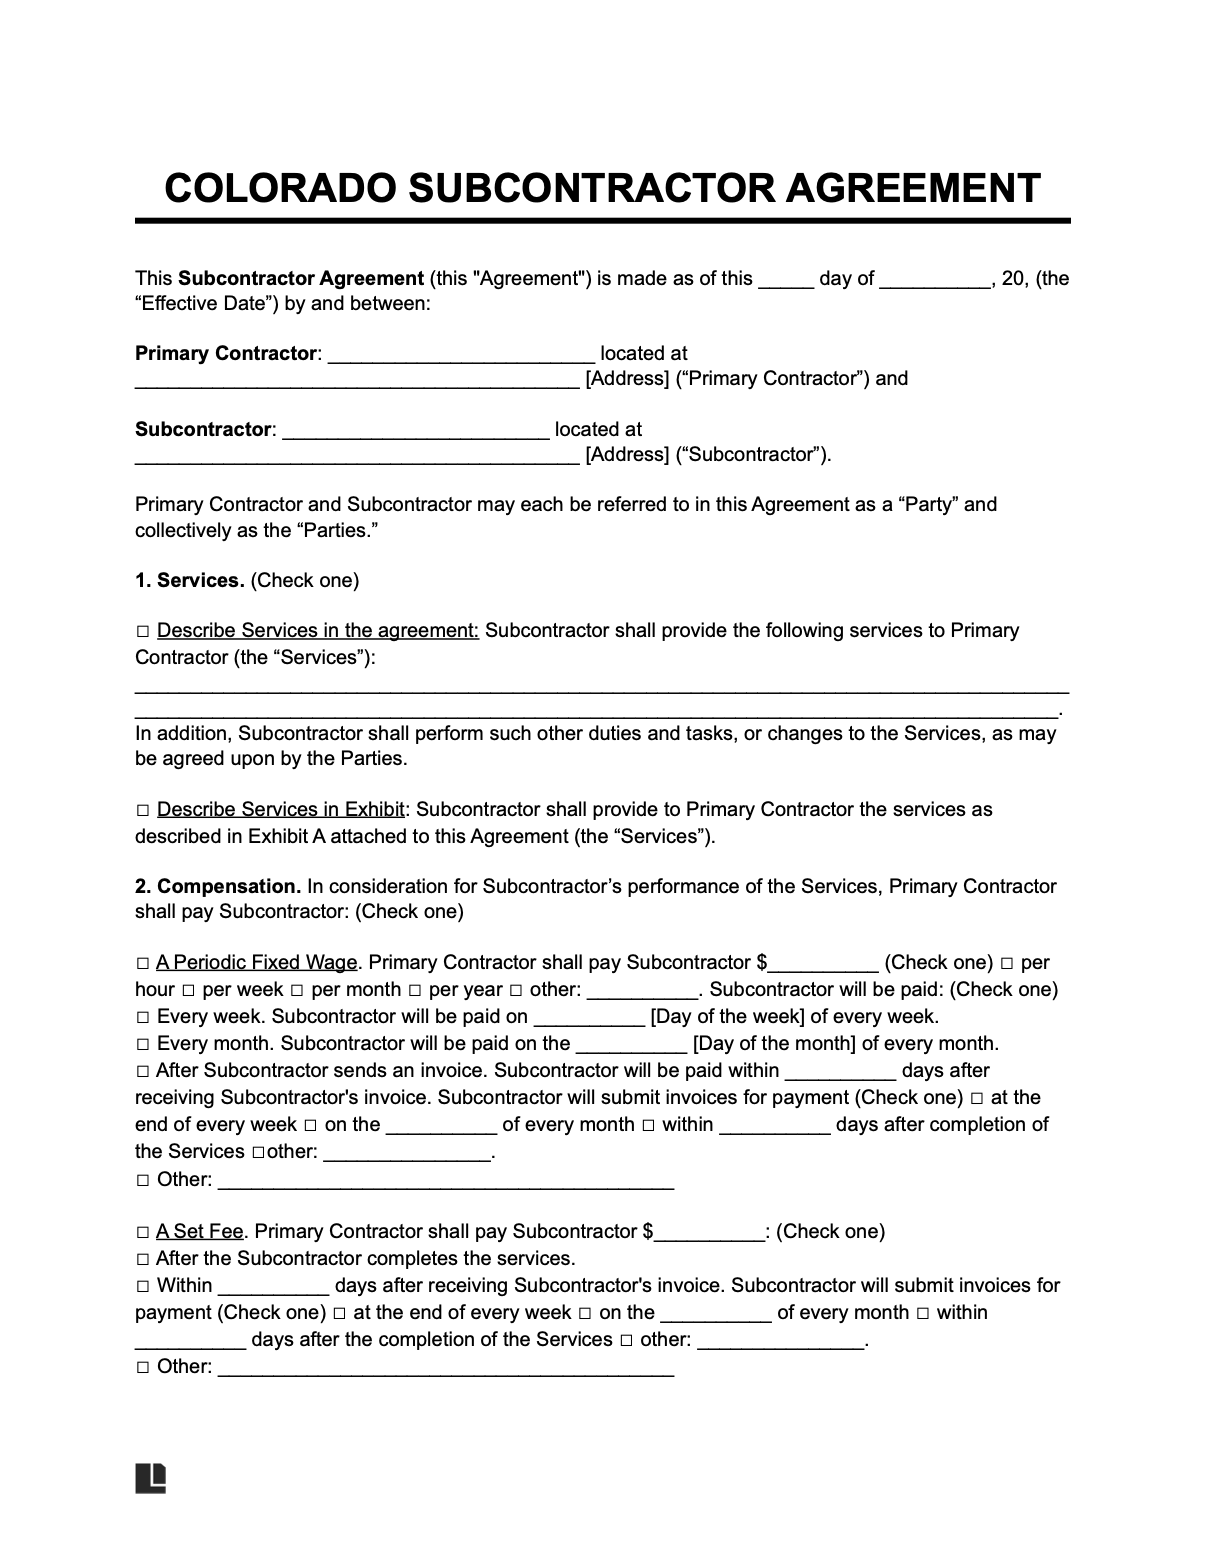 colorado subcontractor agreement template